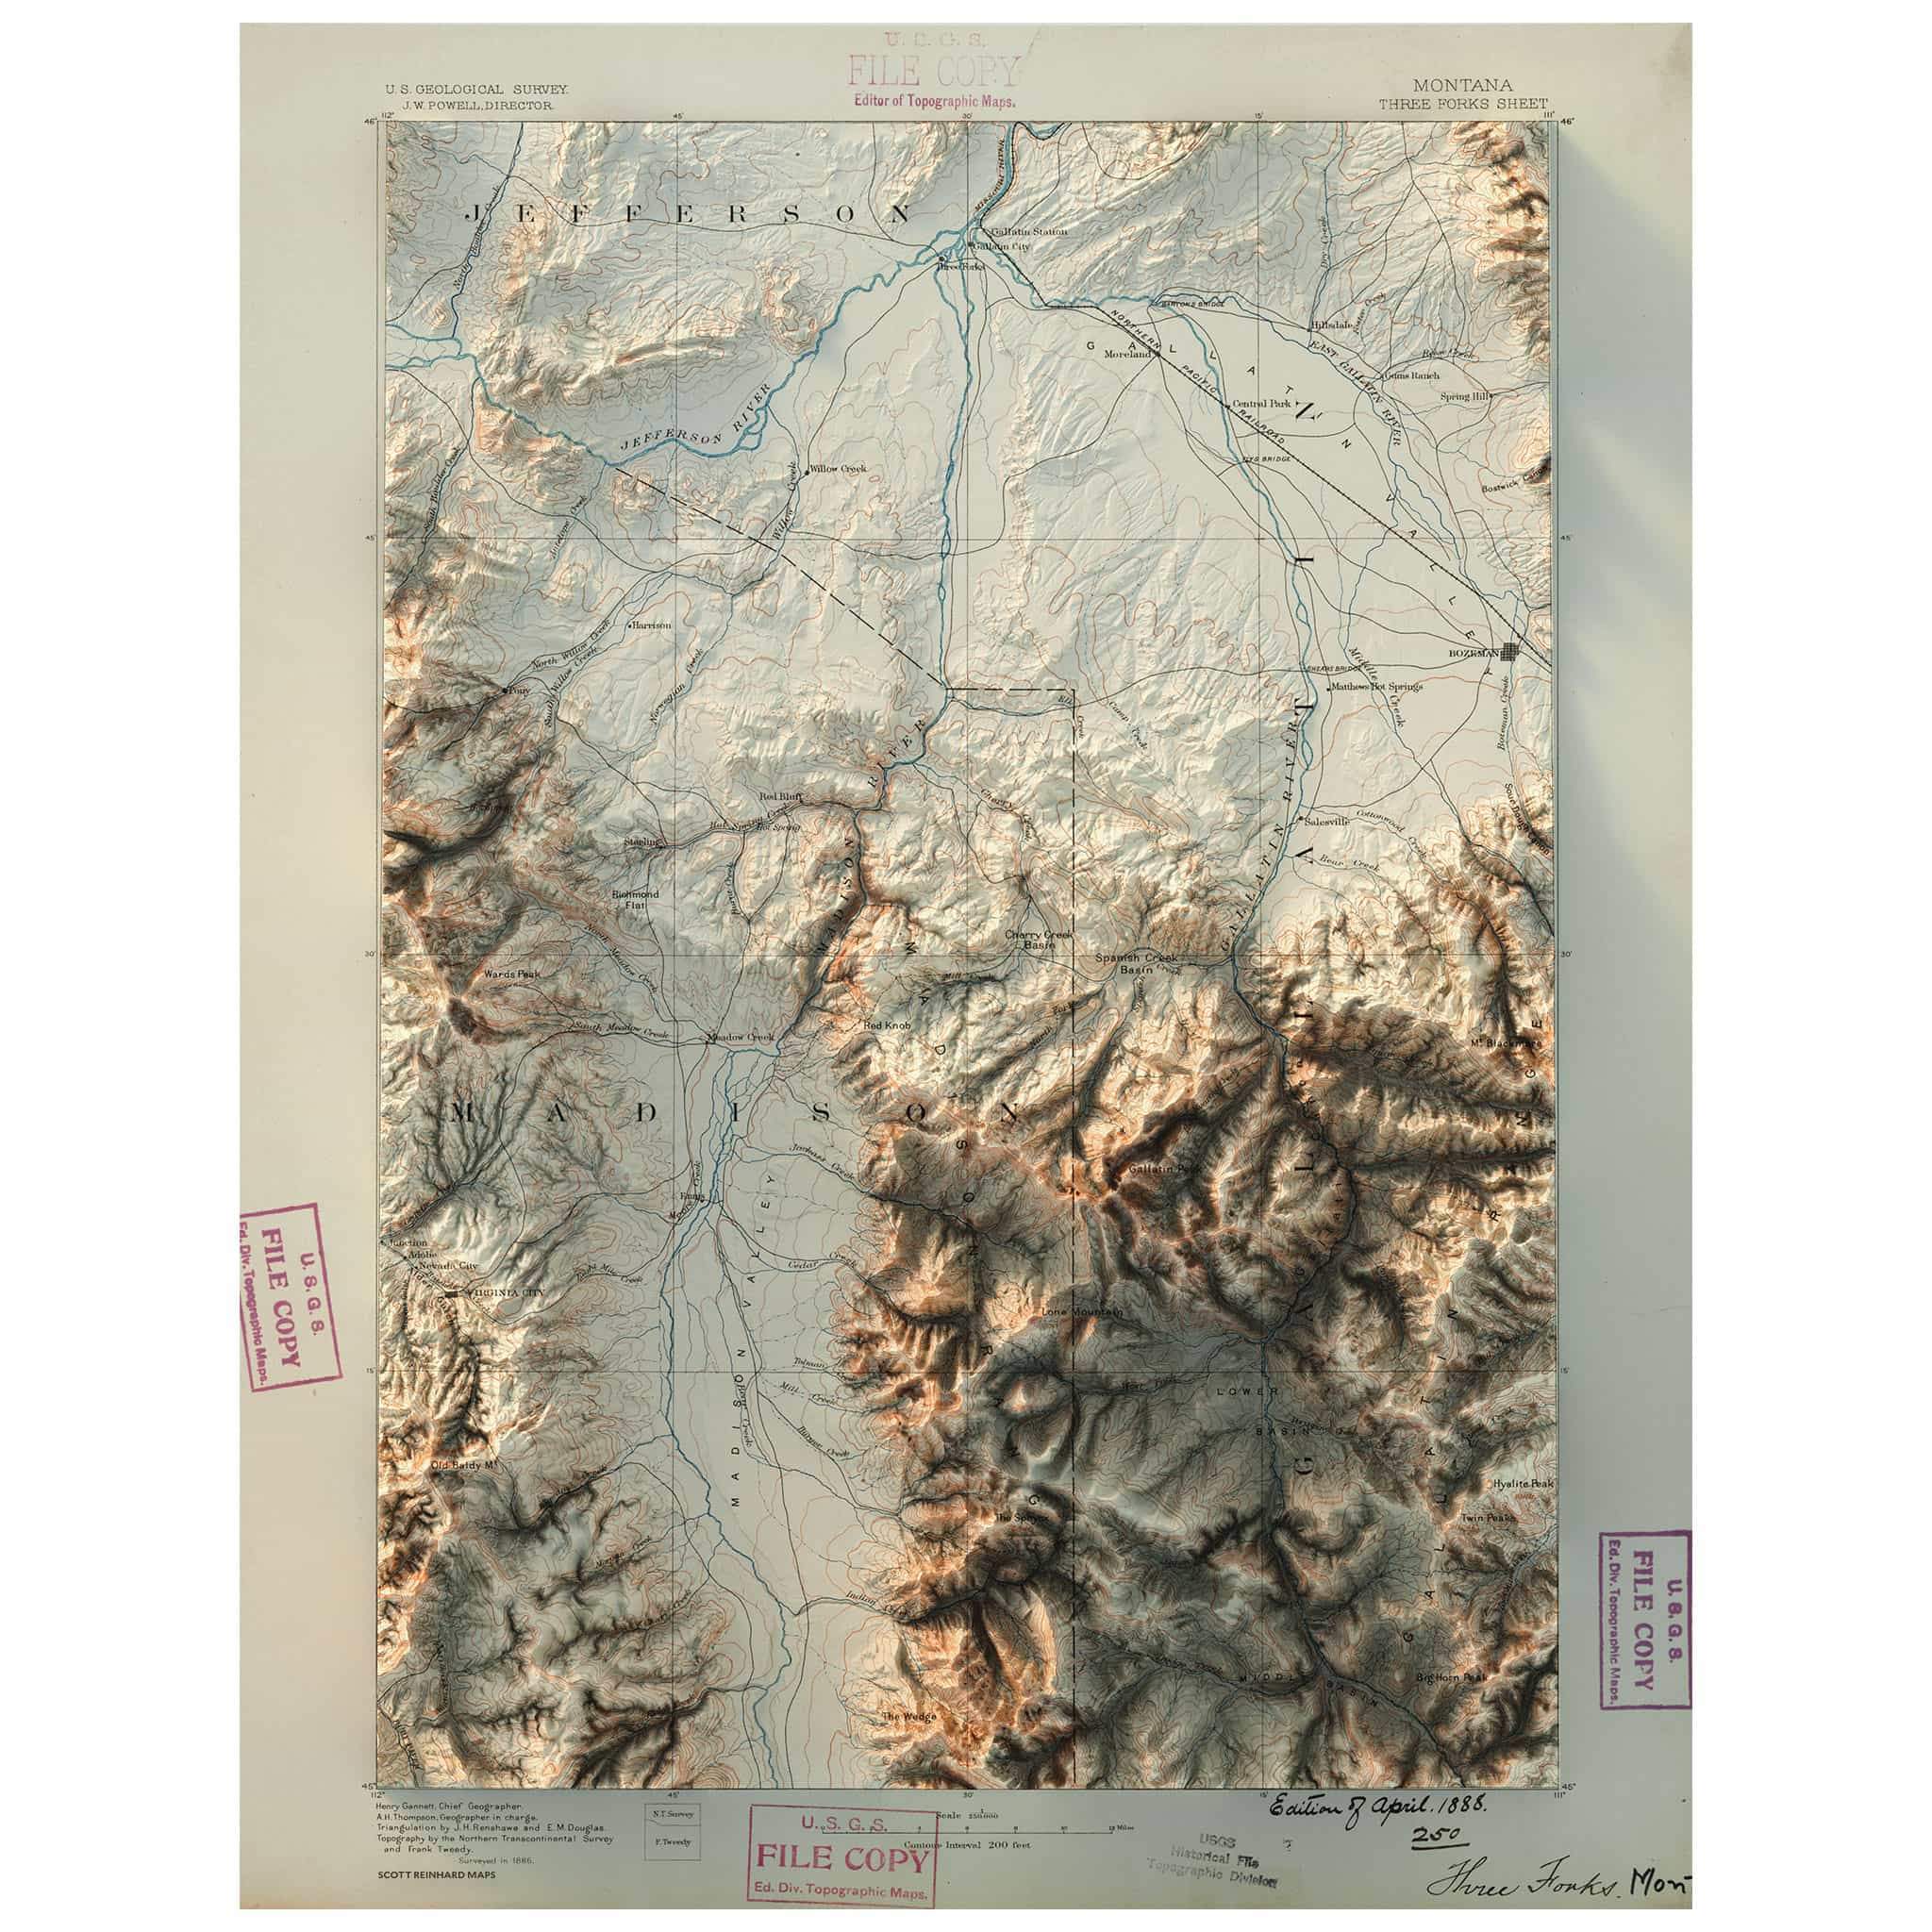 Three Forks, Montana Map